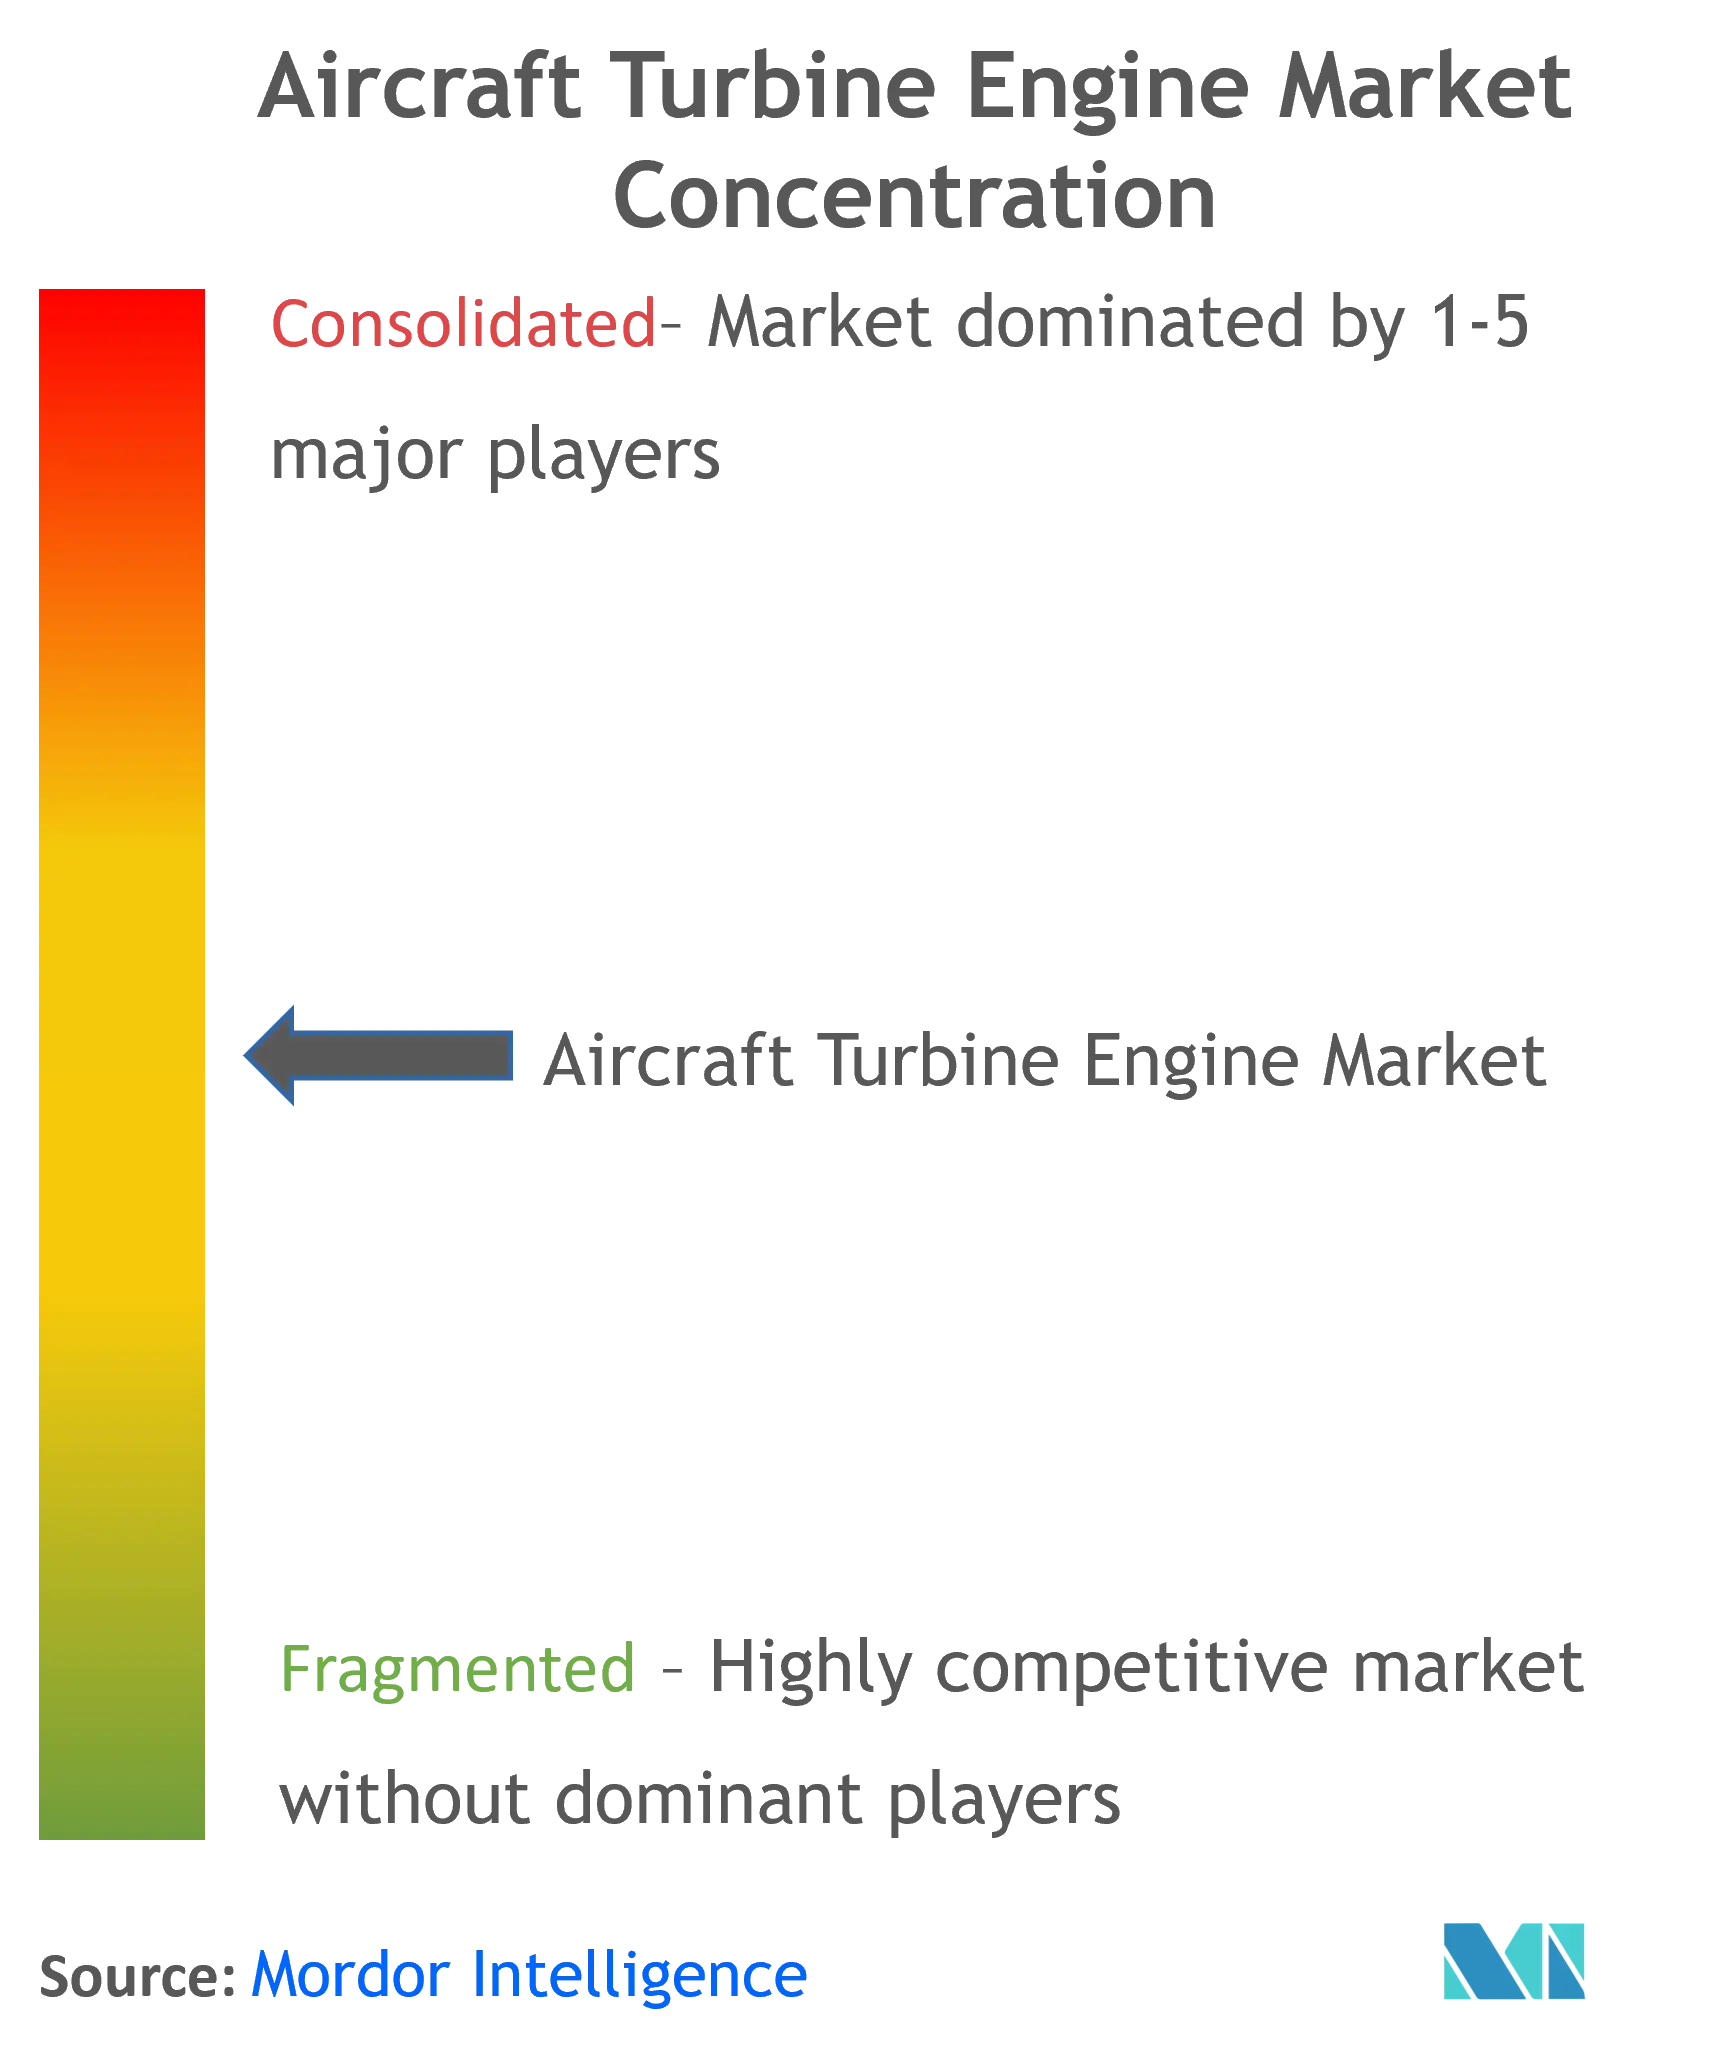 Aircraft Turbine Engine Market Concentration